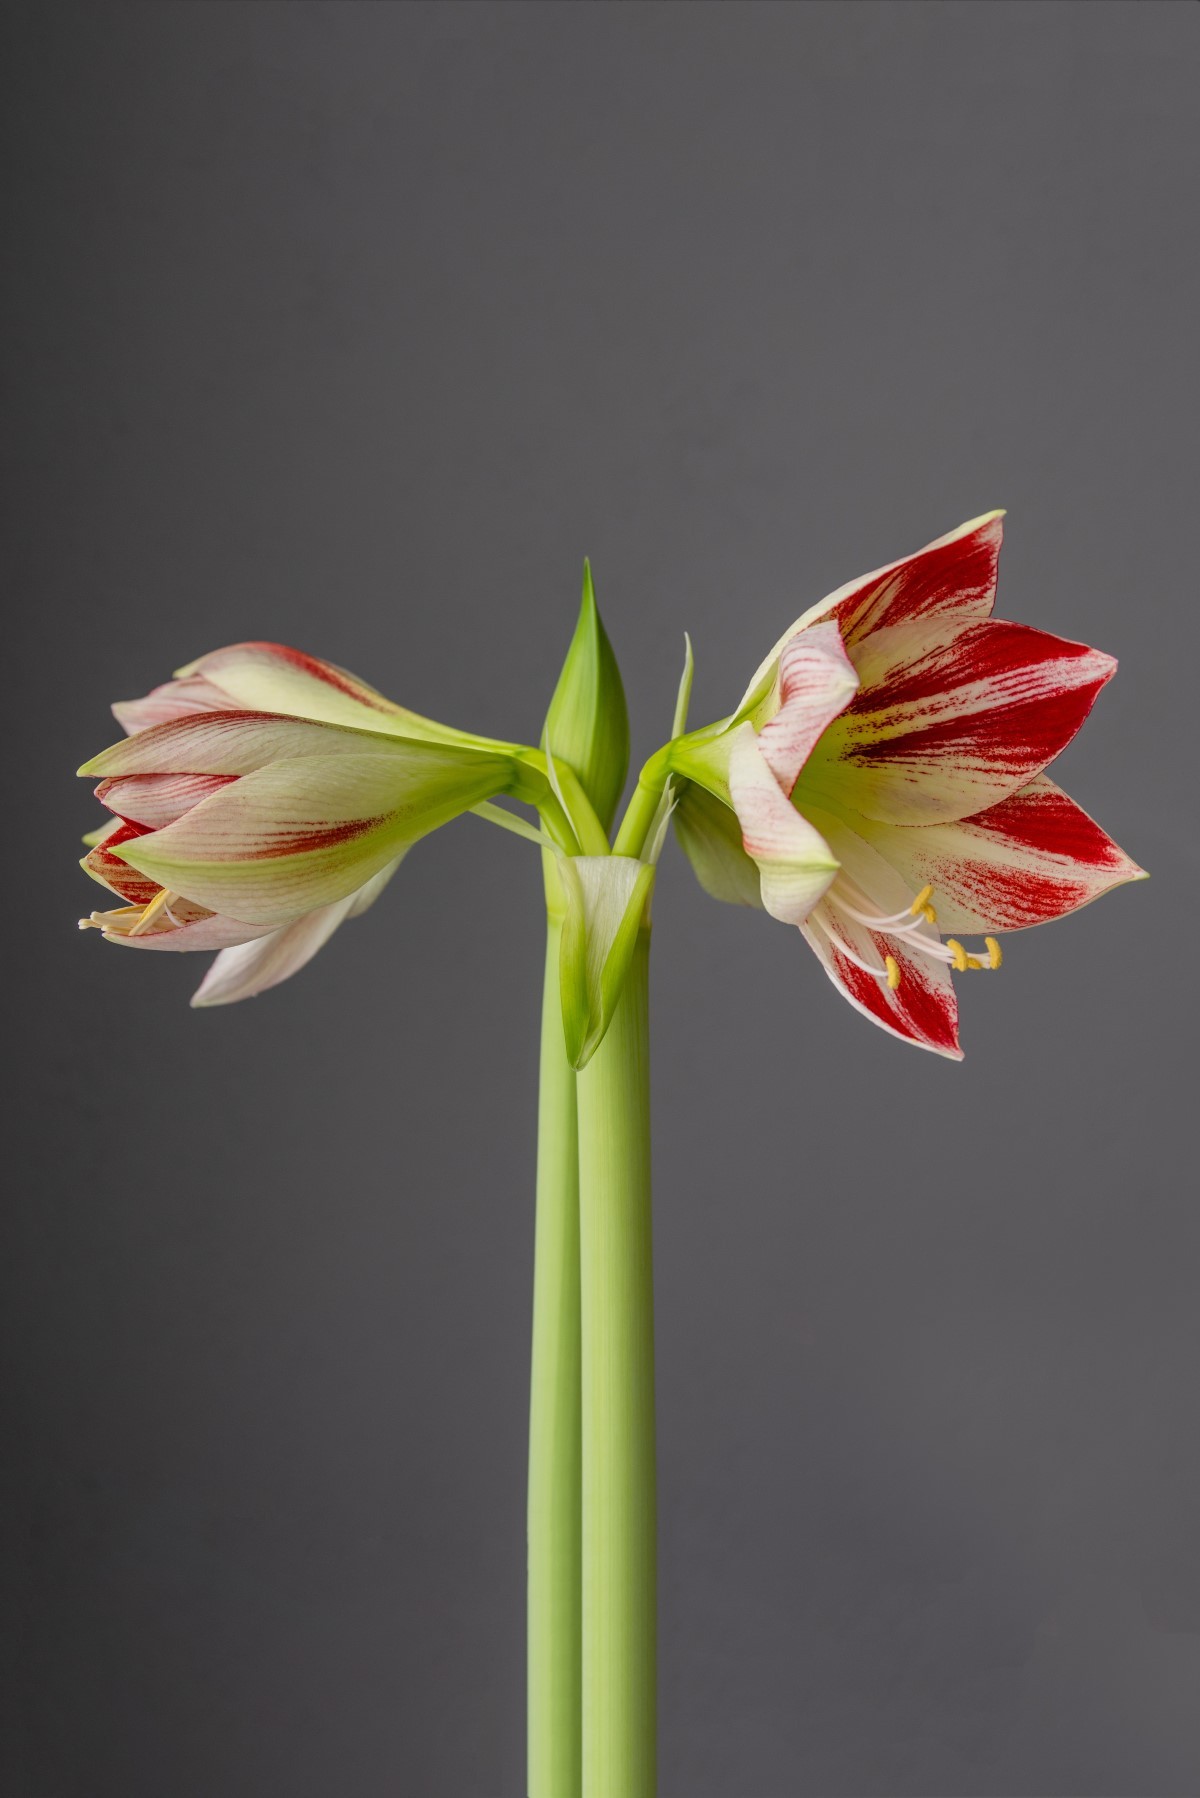 A flor tem altura média de 40cm, podendo alcançar até 70cm (Foto: Unsplash / Lucas van Oort / CreativeCommons)